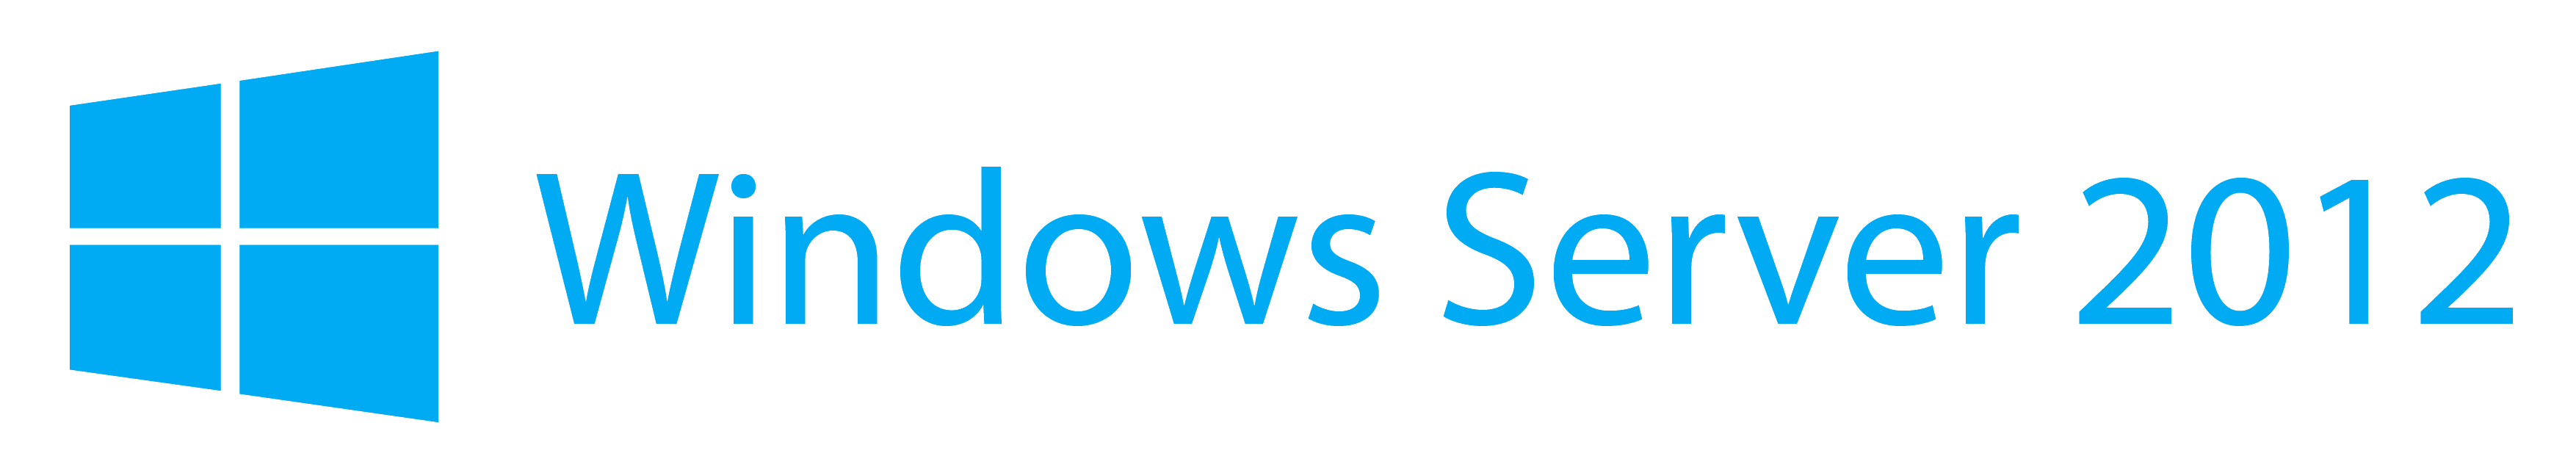 Microsoft Windows Server 2012 Logo - File:Windows server 2012-logo.png - Wikimedia Commons